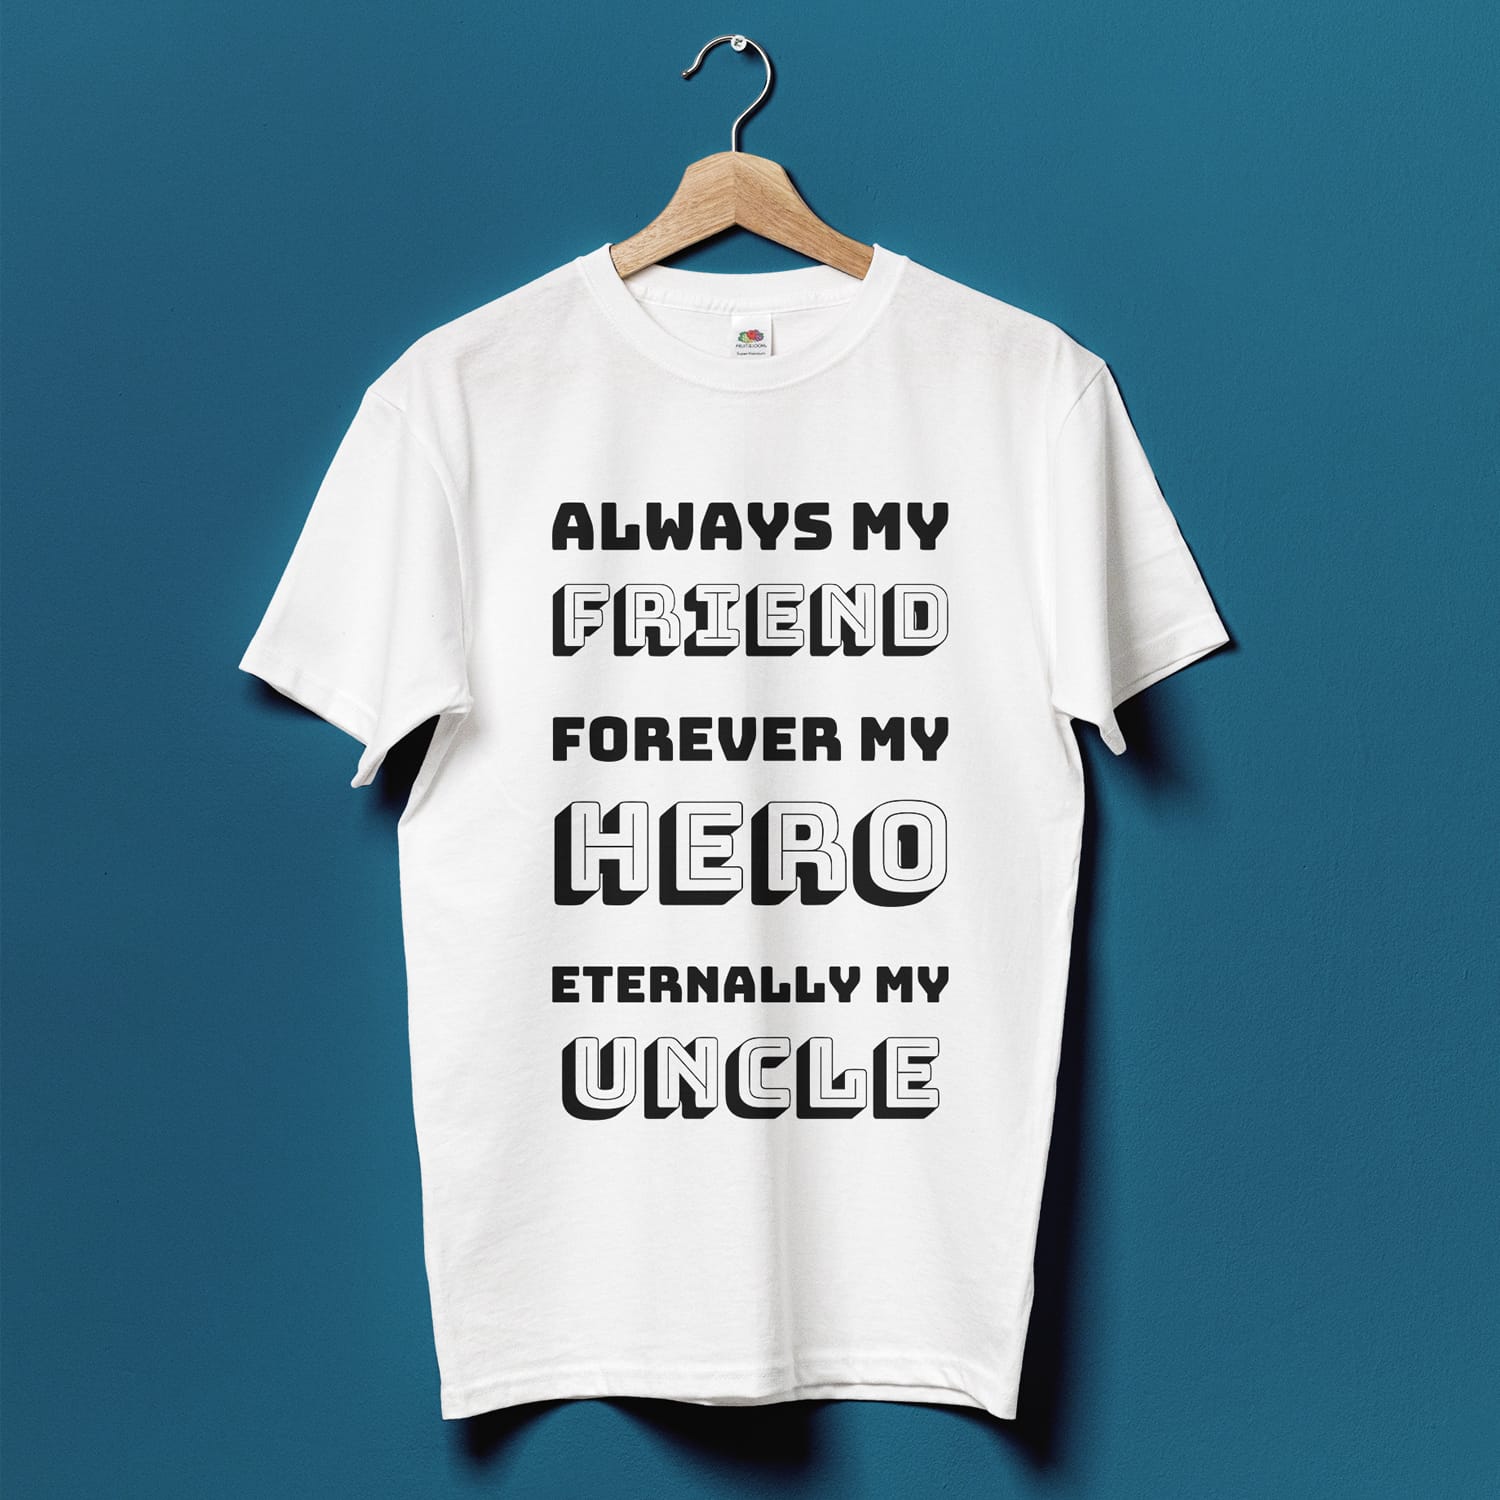 Always my friend, Forever my Hero, Eternally my Uncle T-shirt Design